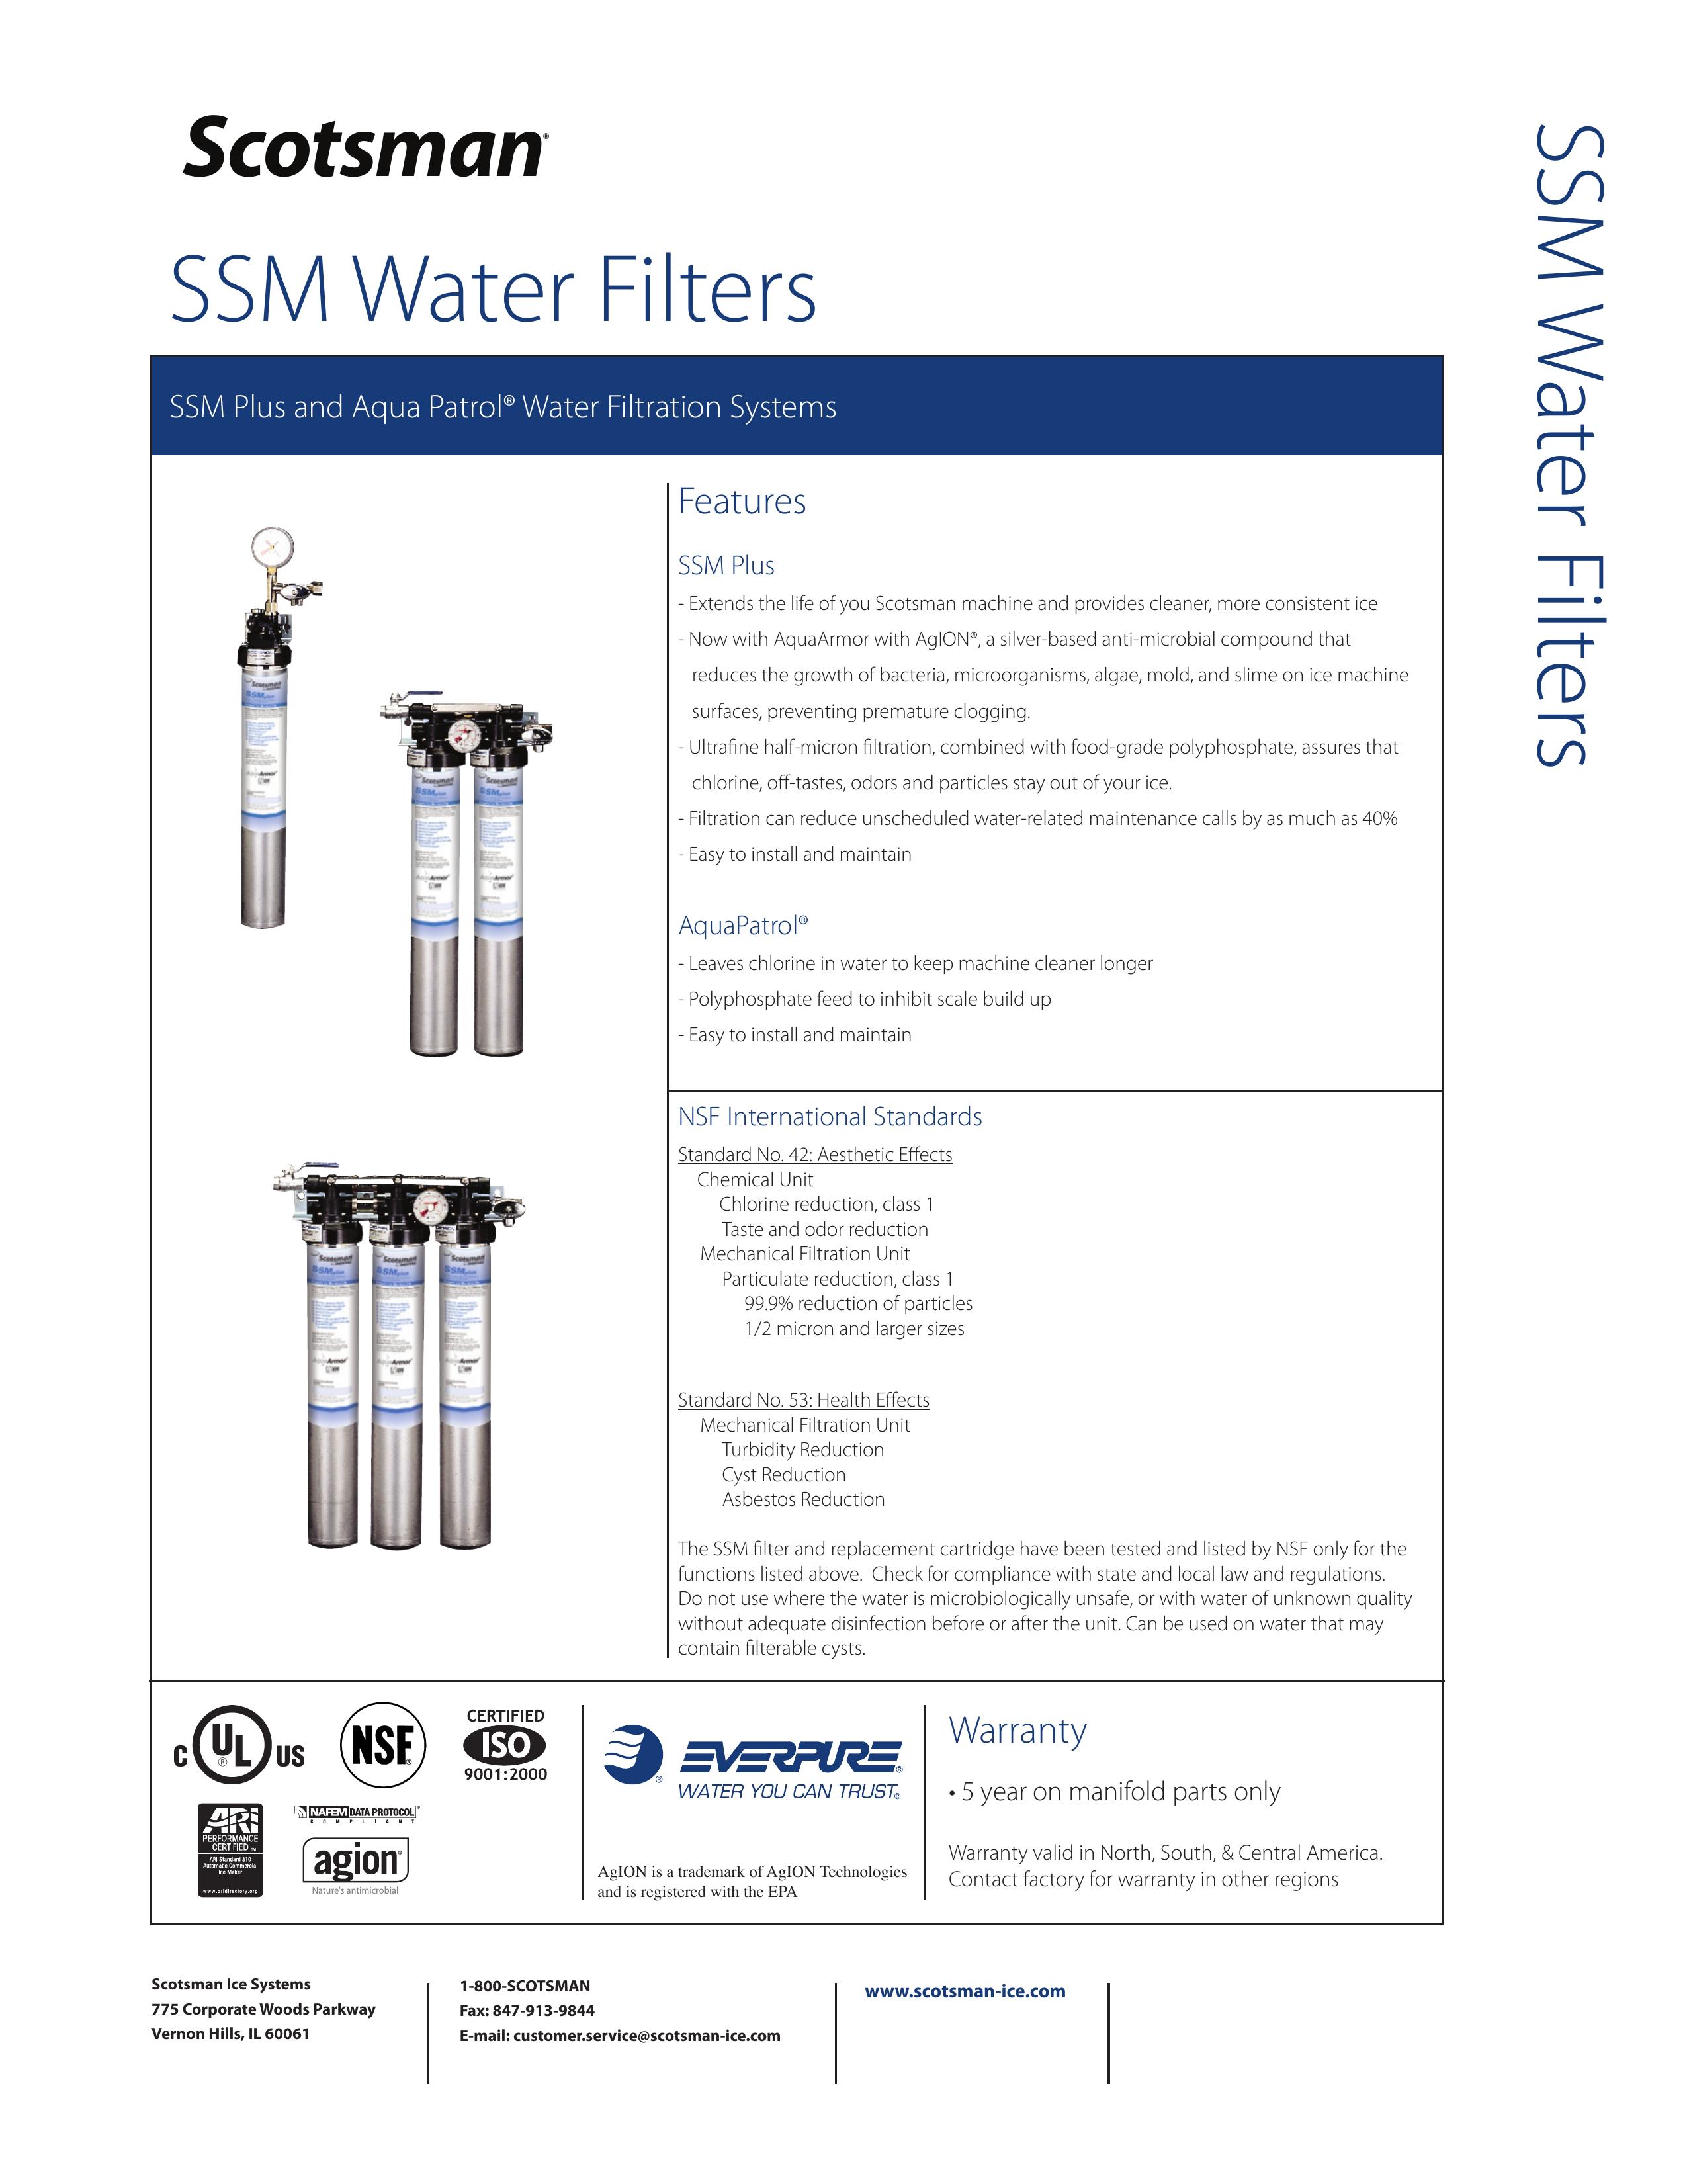 Scotsman Ice SSM Plus Water Dispenser User Manual